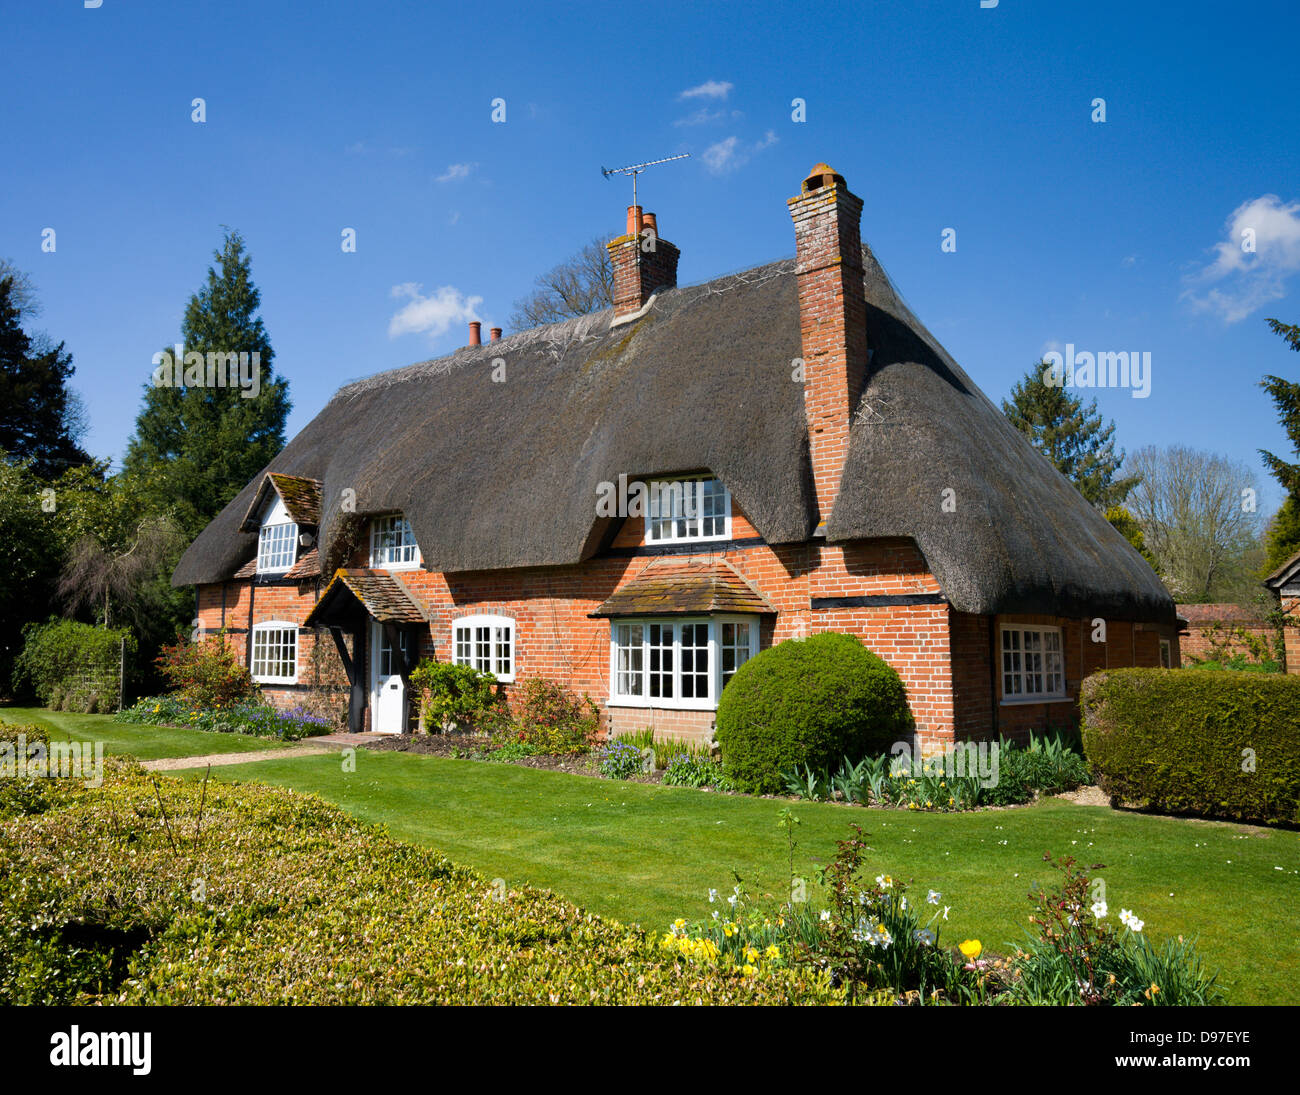 Bonita casita con techo de paja en la aldea de Hampshire Longparish, Hampshire, Inglaterra. Primavera (abril 2009) Foto de stock